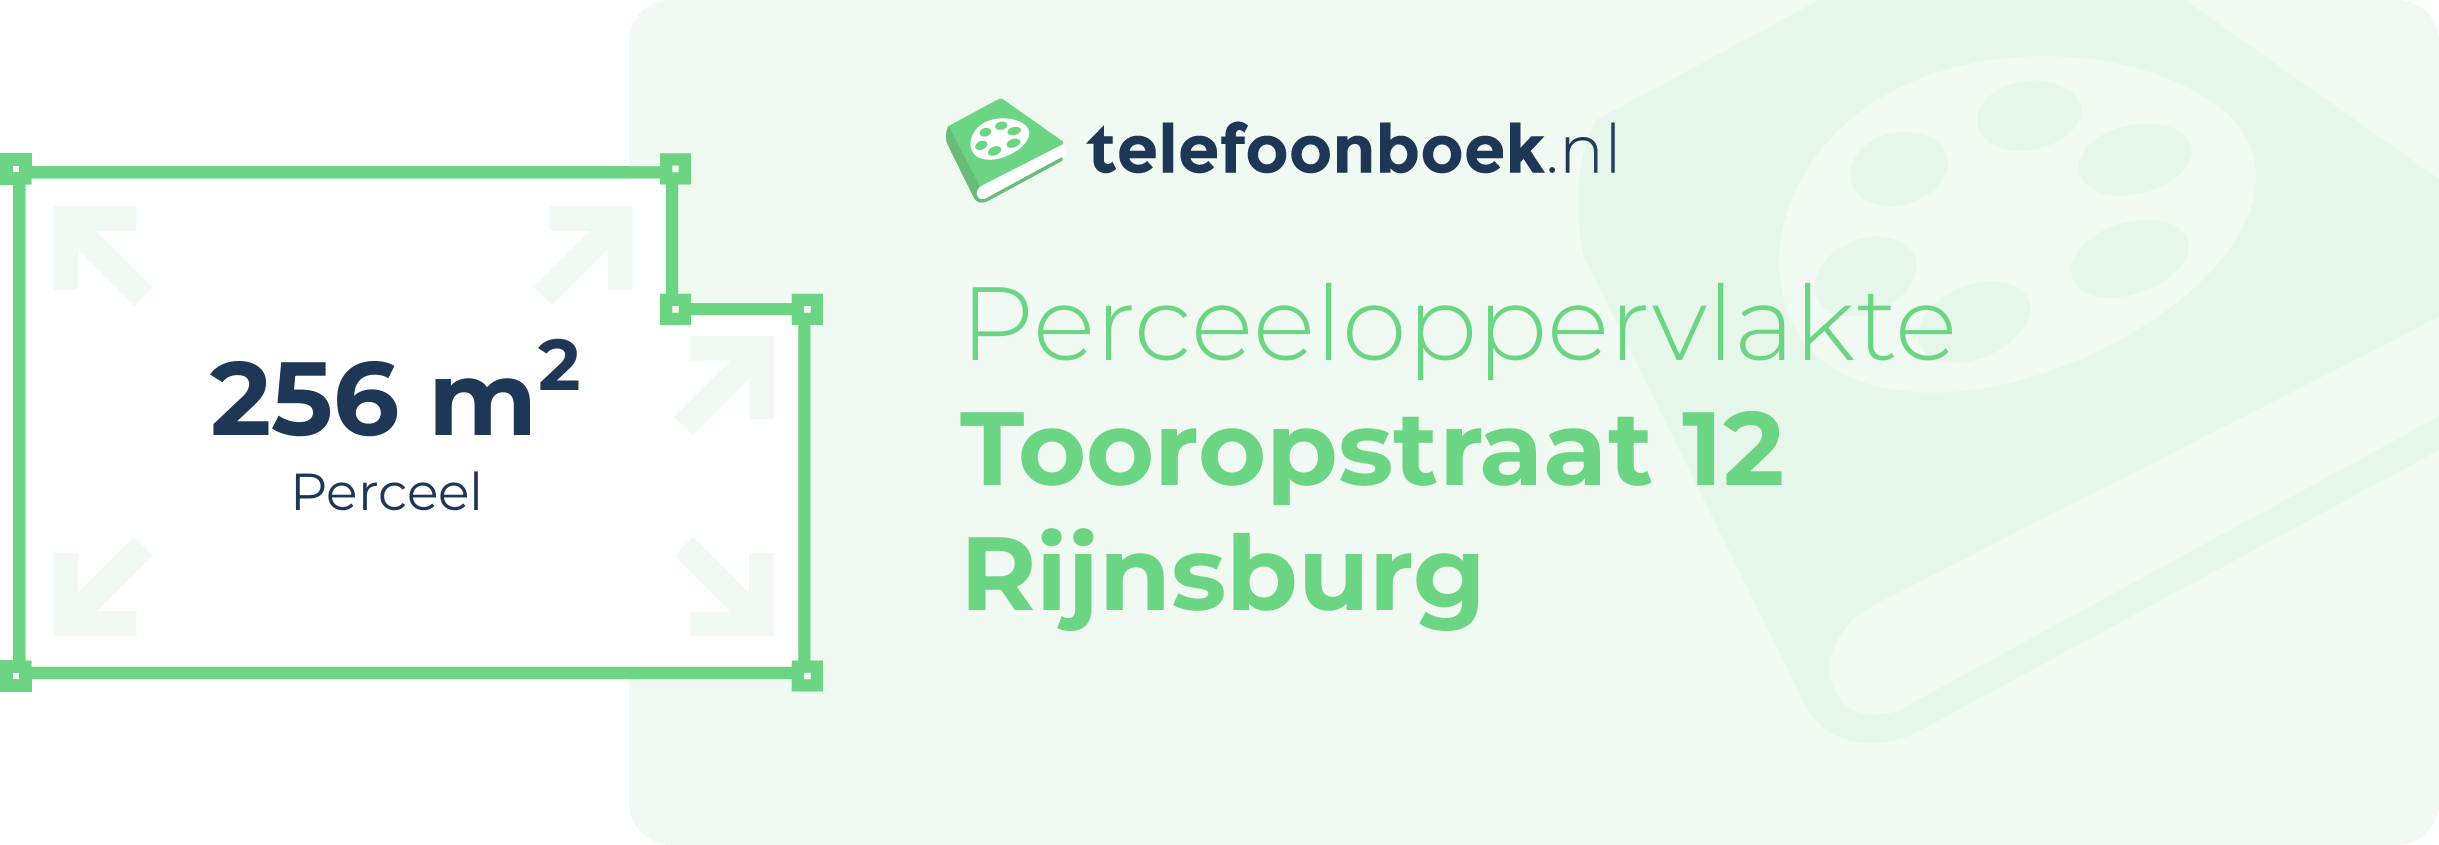 Perceeloppervlakte Tooropstraat 12 Rijnsburg